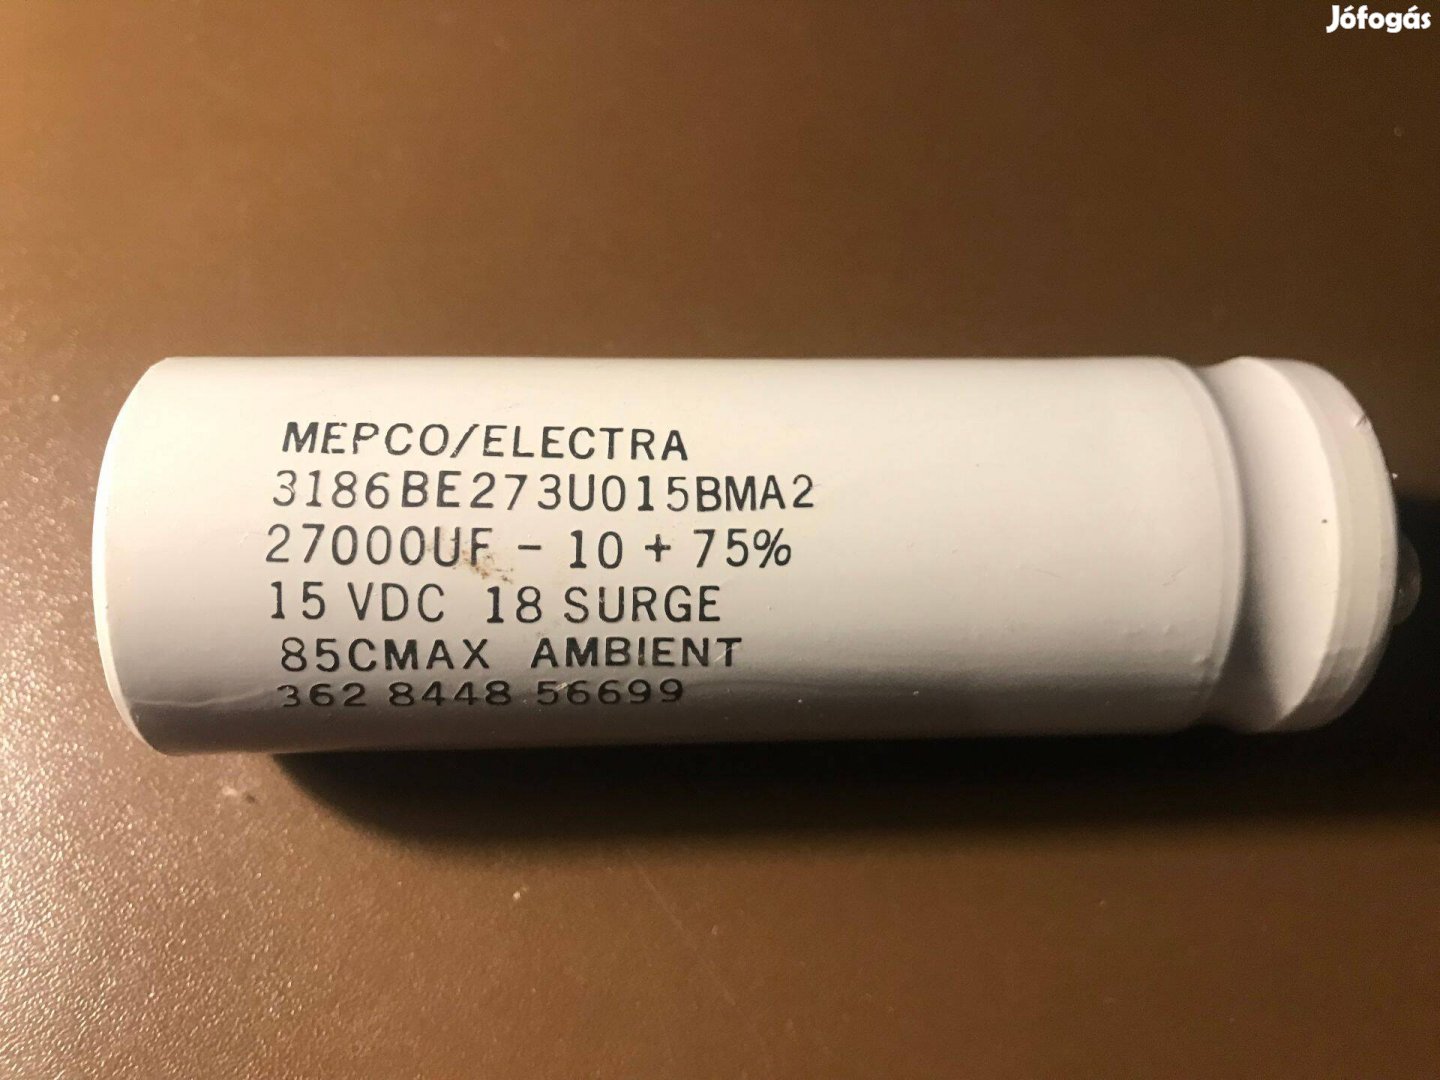 Eladó Mepco/Electra 27000uF 15VDC kondenzátor